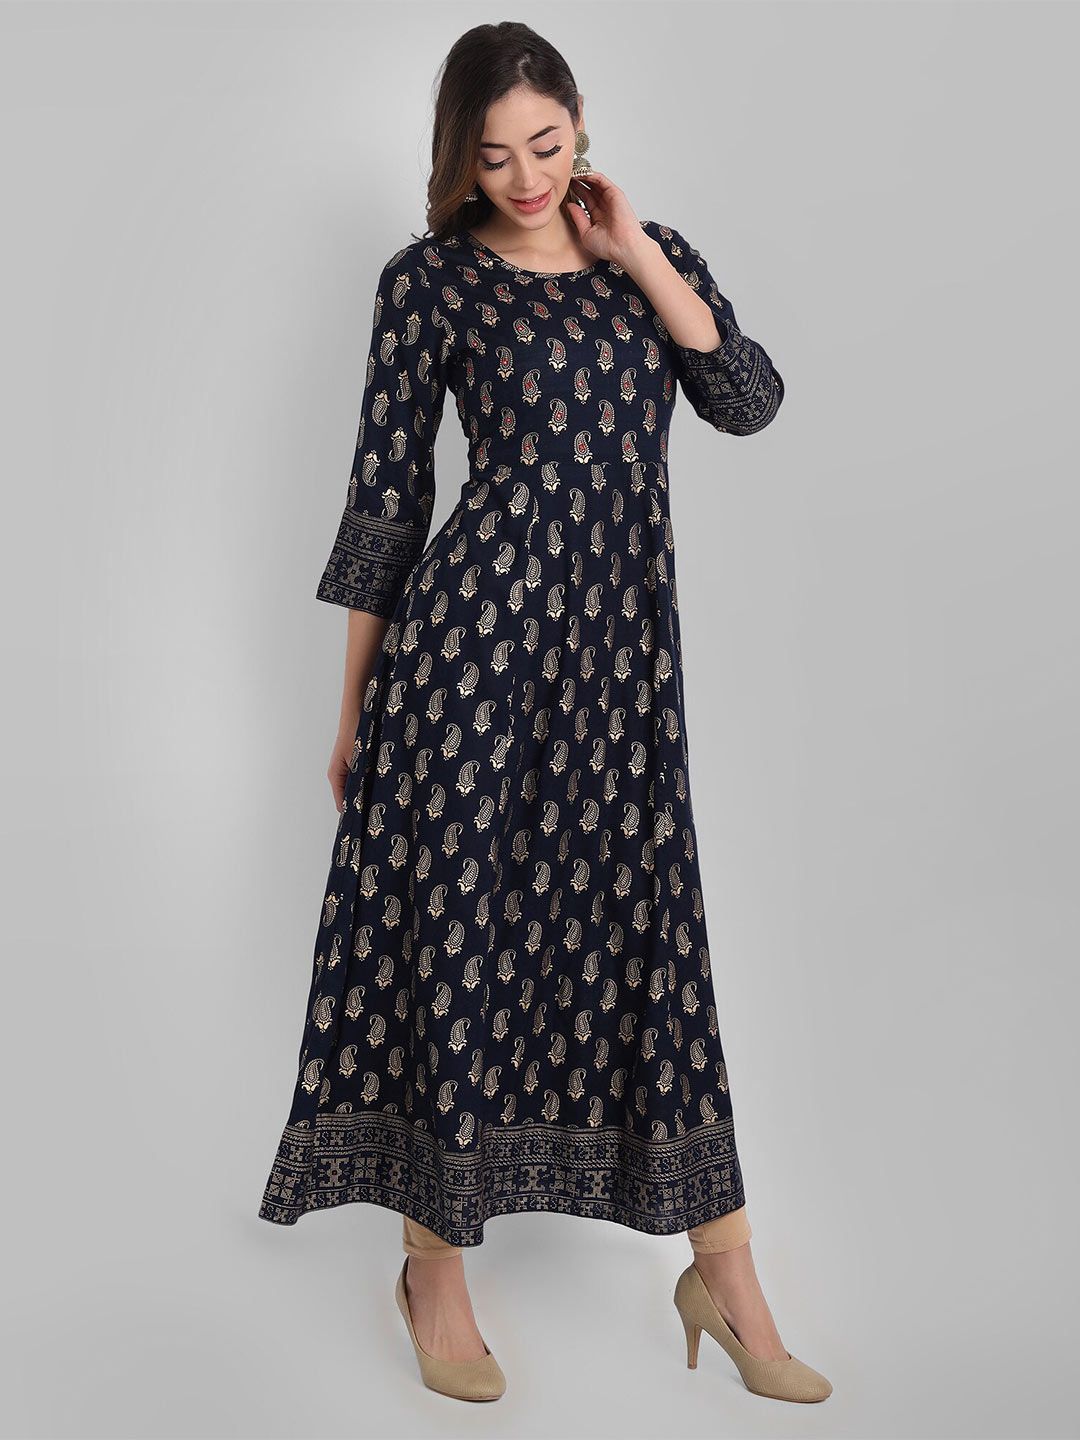 Juniper Navy Blue & Gold-Toned Ethnic Motifs Ethnic Maxi Dress Price in India